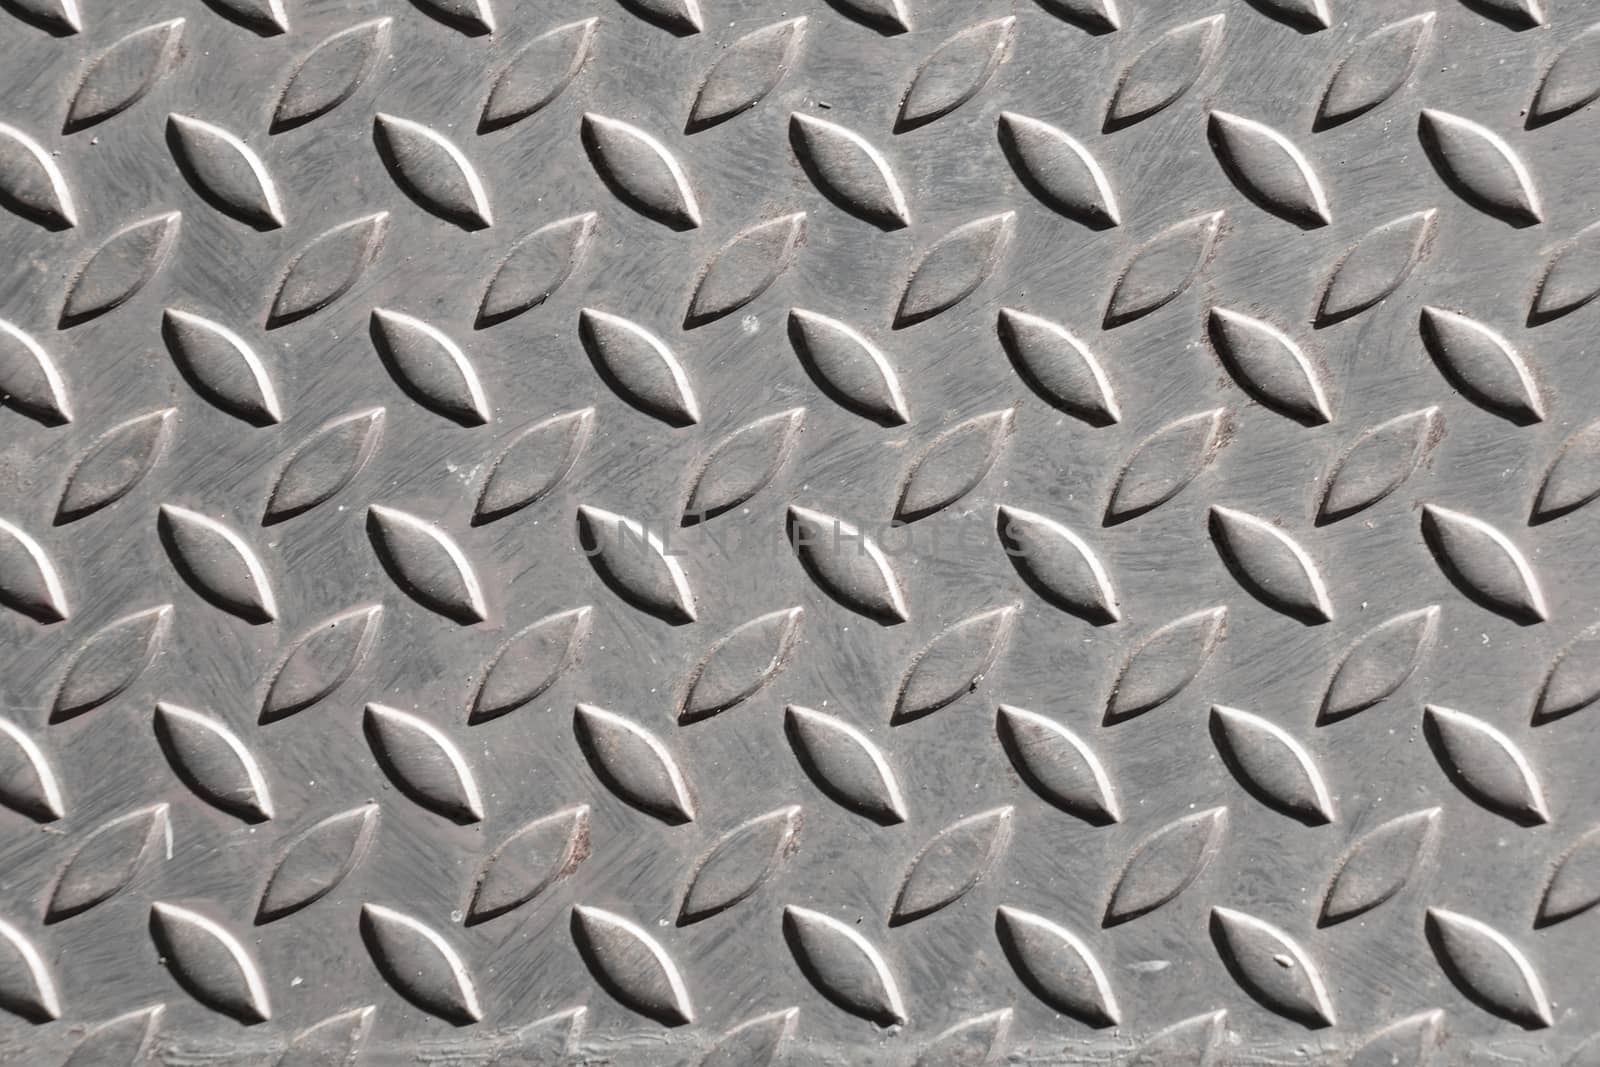 image of metal sheet texture